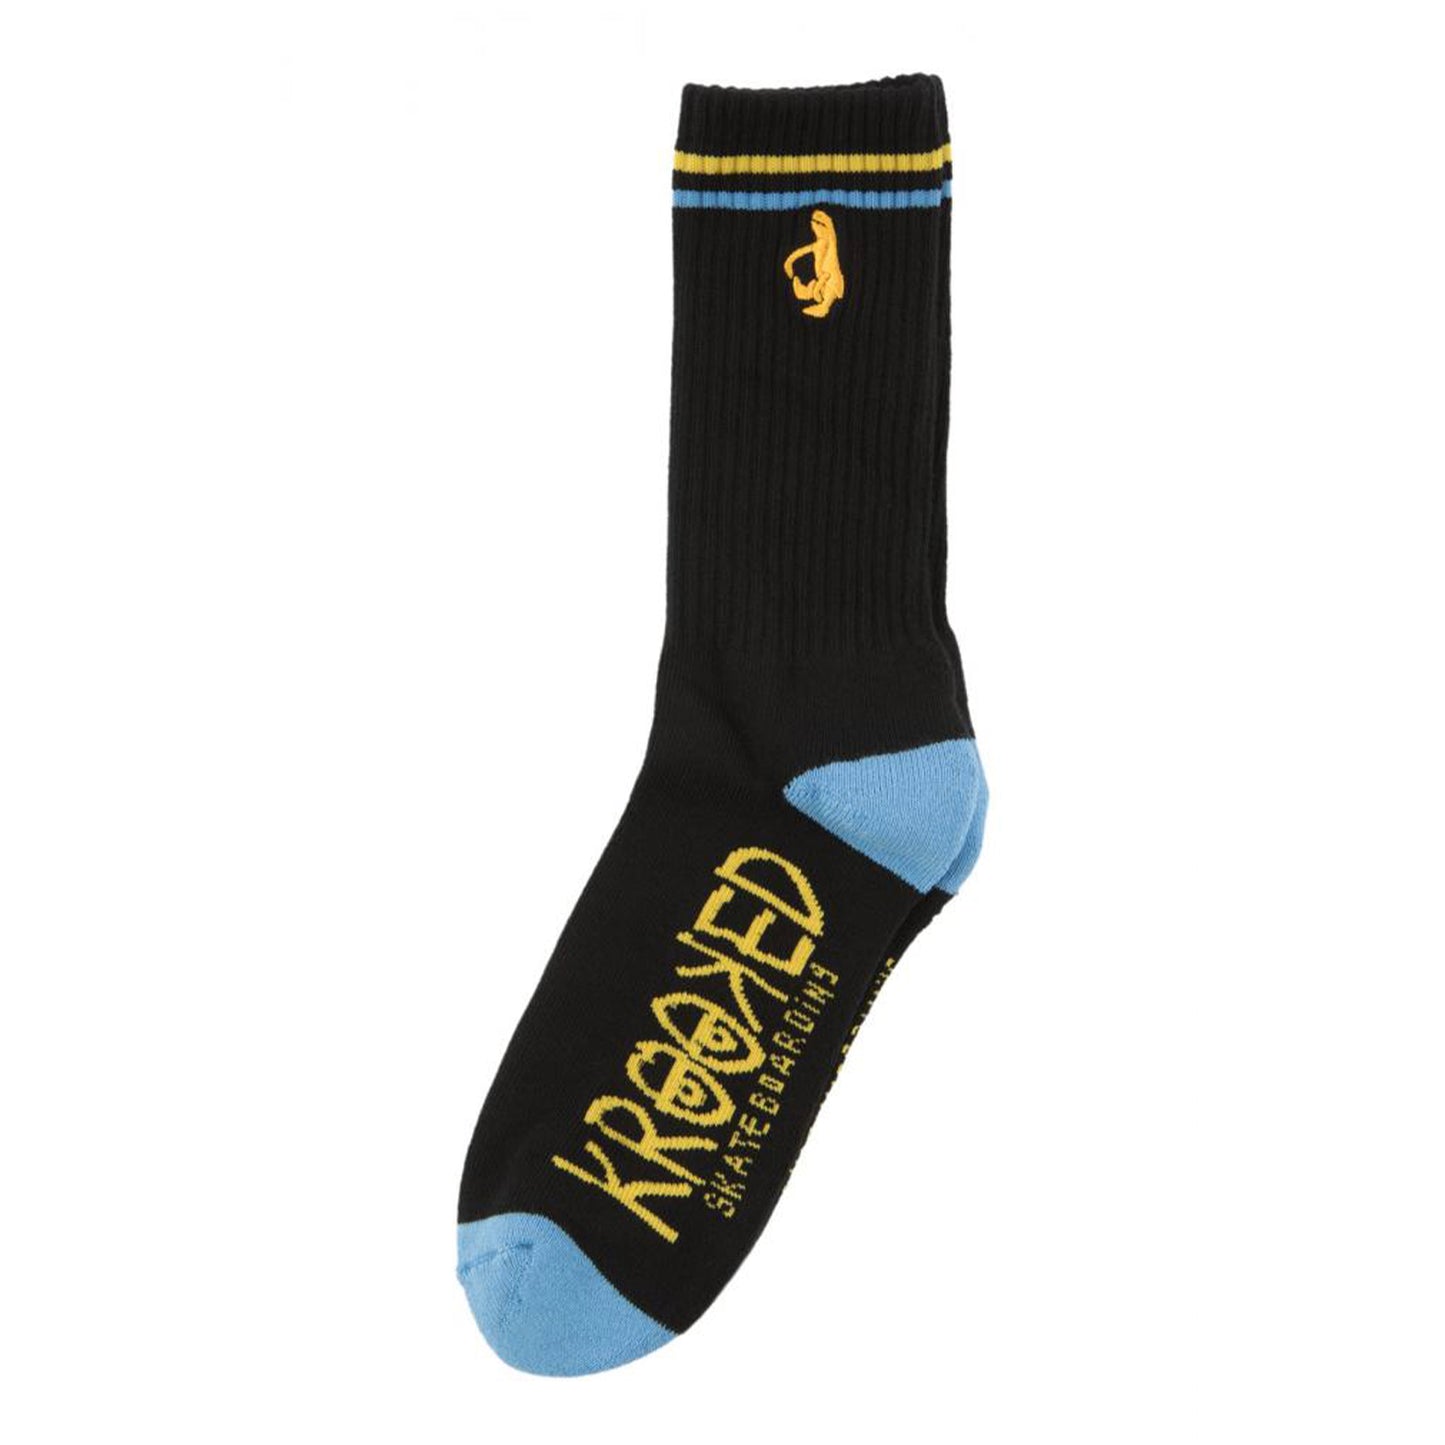 Krooked - Shmoo Sock - Black / Blue / Yellow - Prime Delux Store